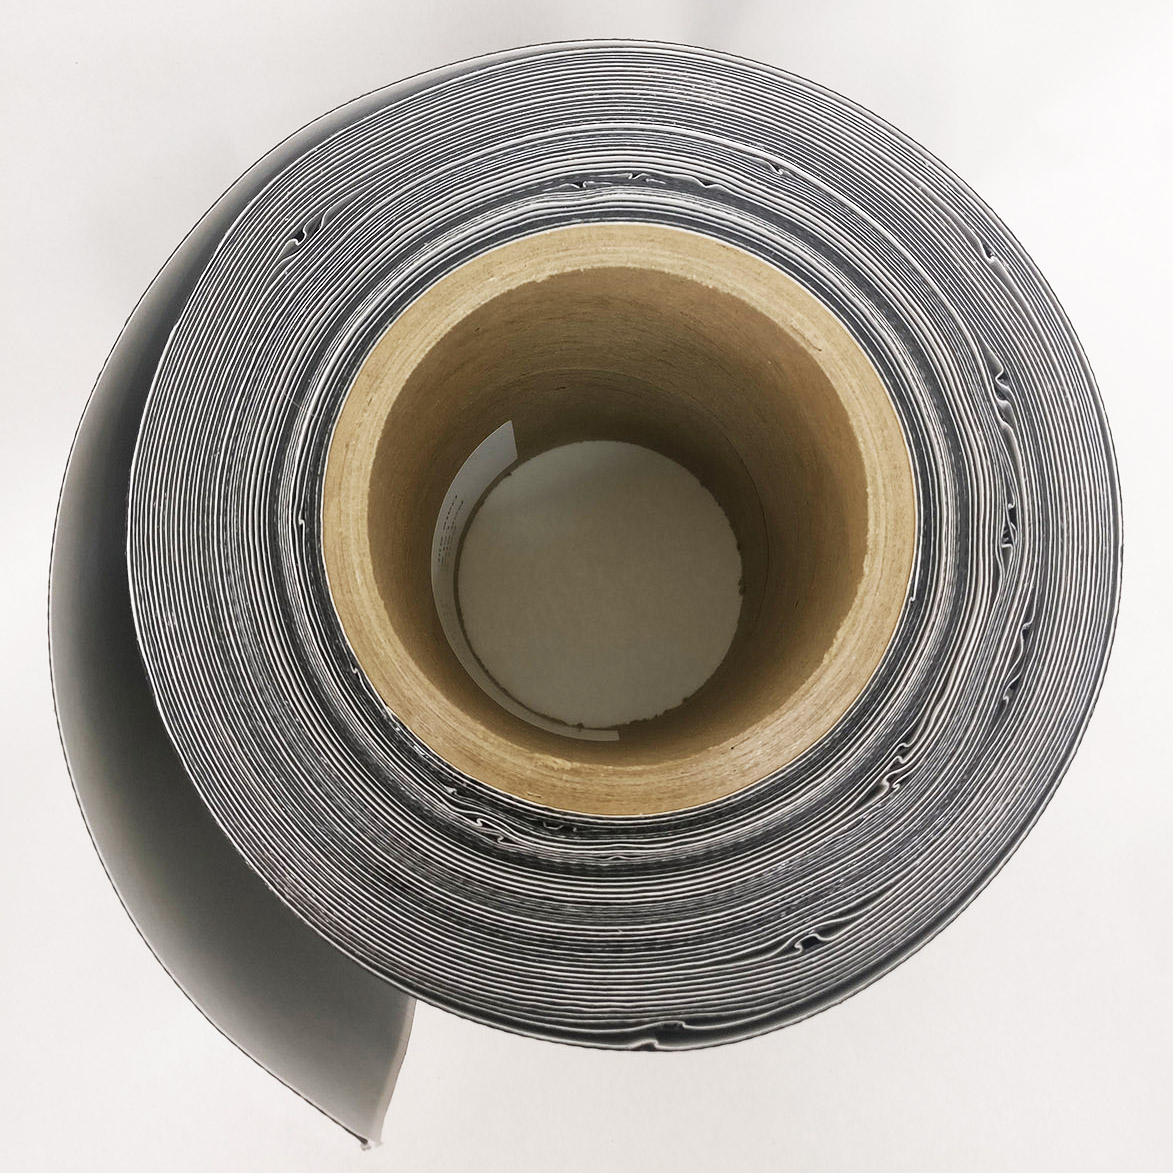 VIKROM for Fabric - 1 Piece Tape Roll Fabric Repair Tape